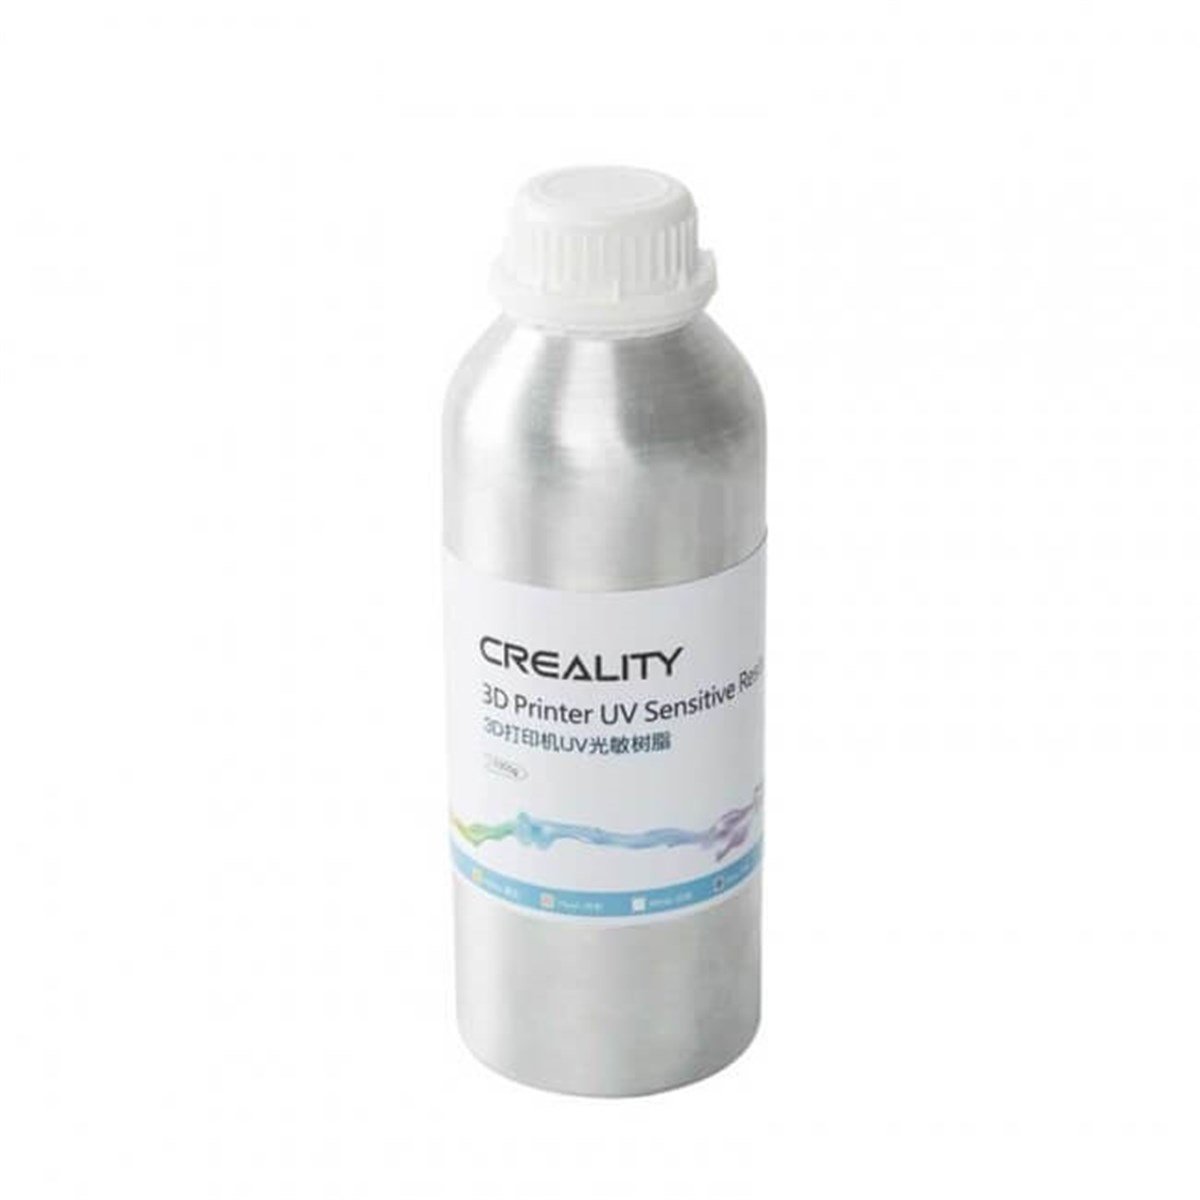 Creality Natural UV Reçine 1 Kg - SLA